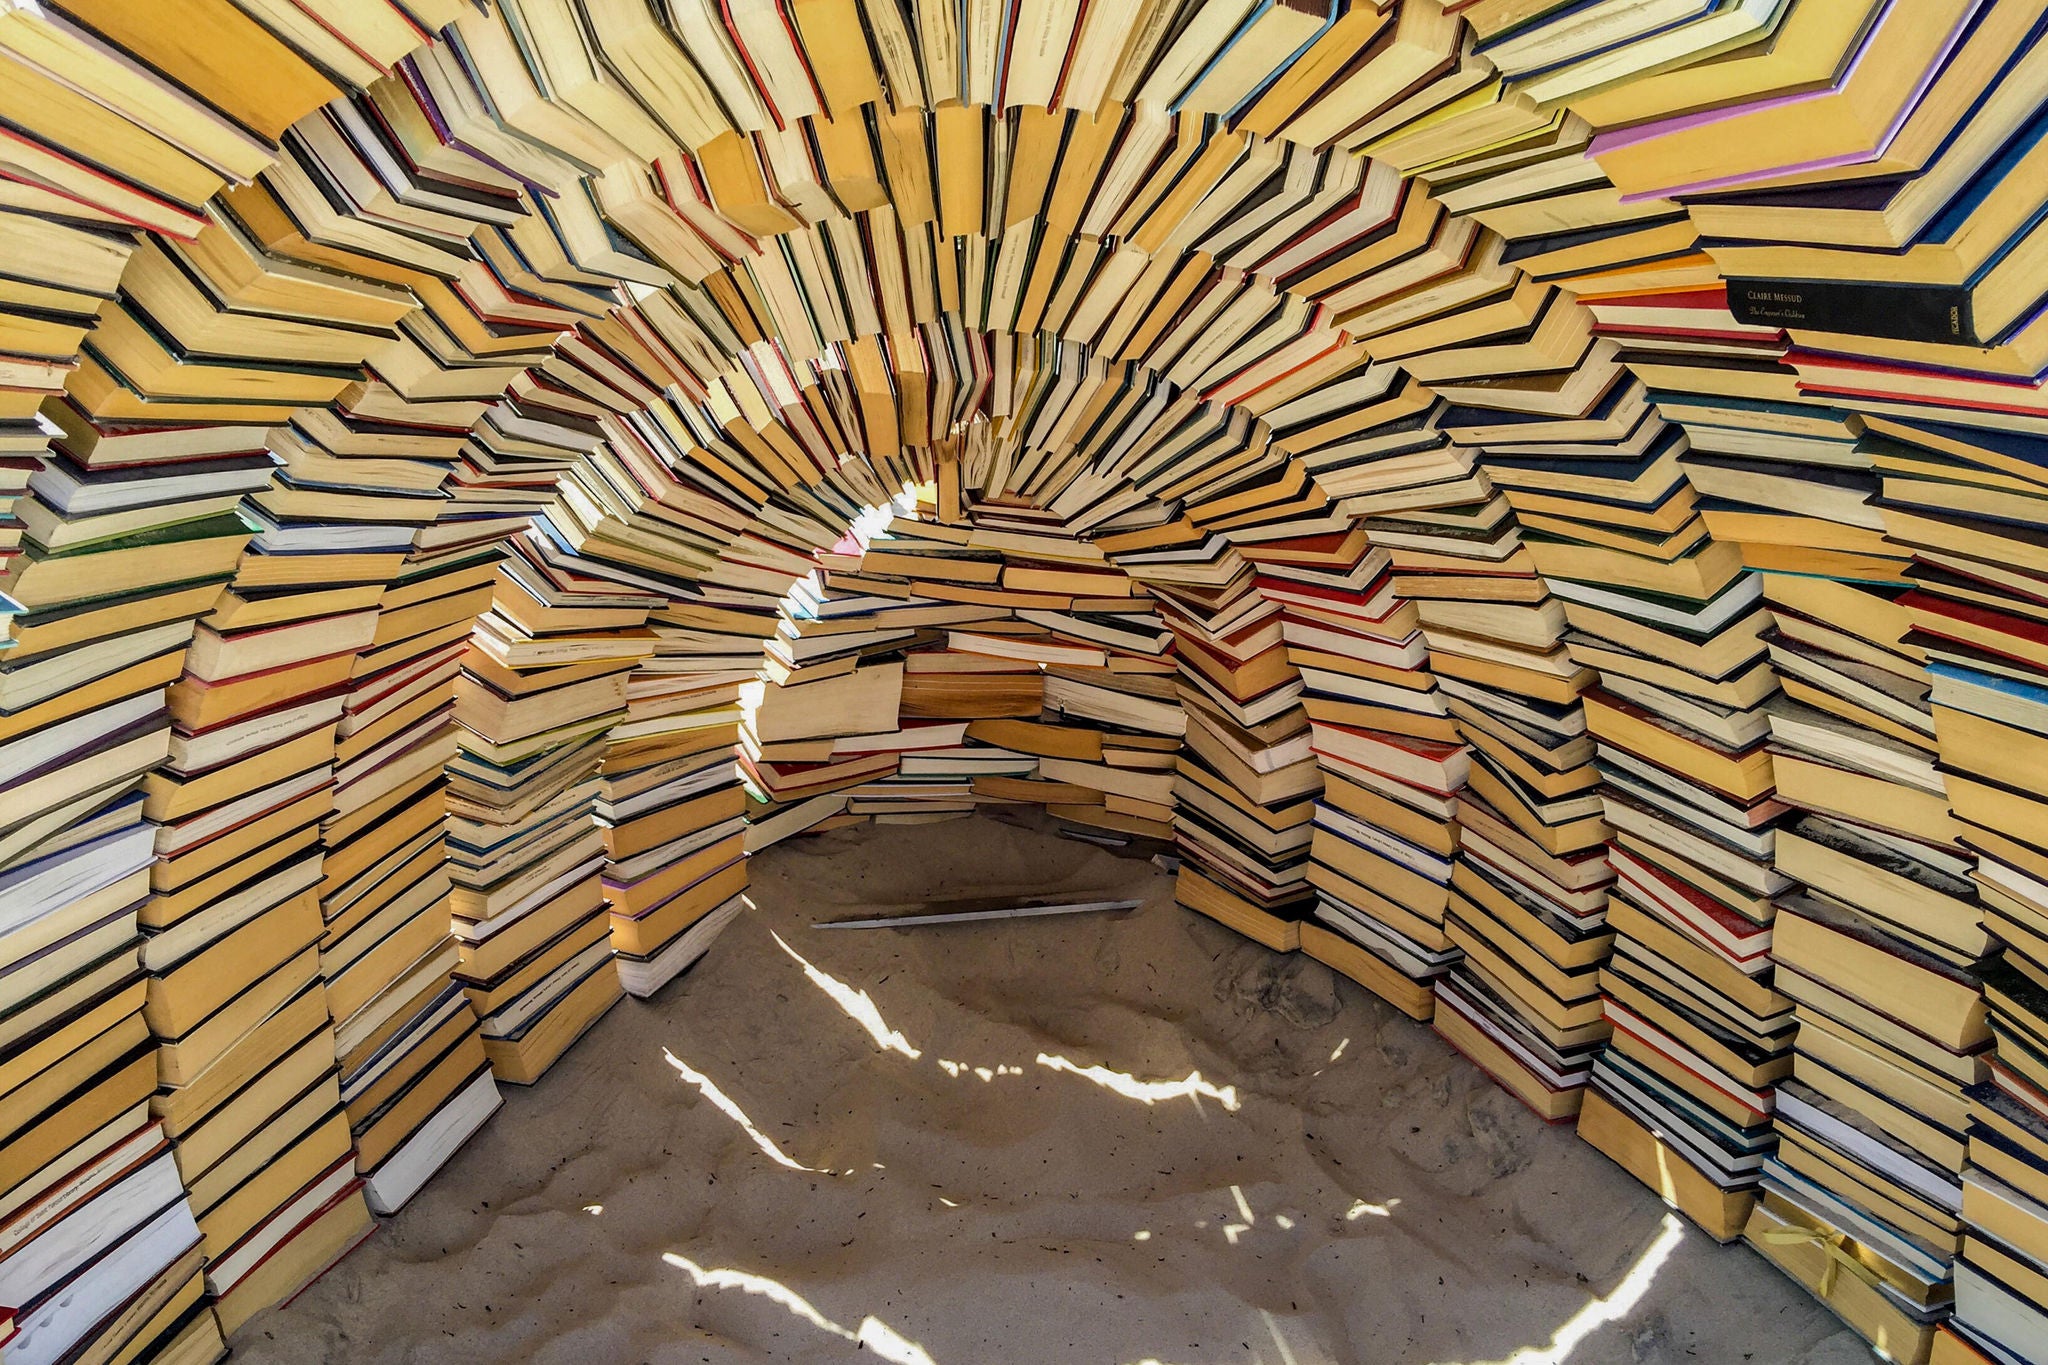 An art installation cave made of books on a beach